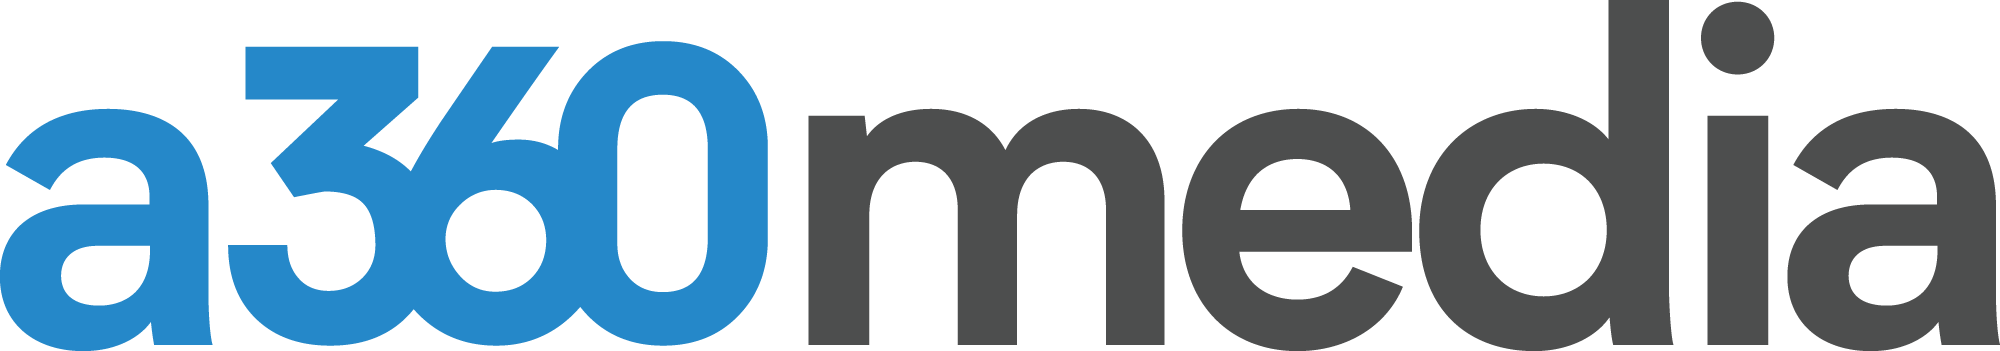 a360 media logo